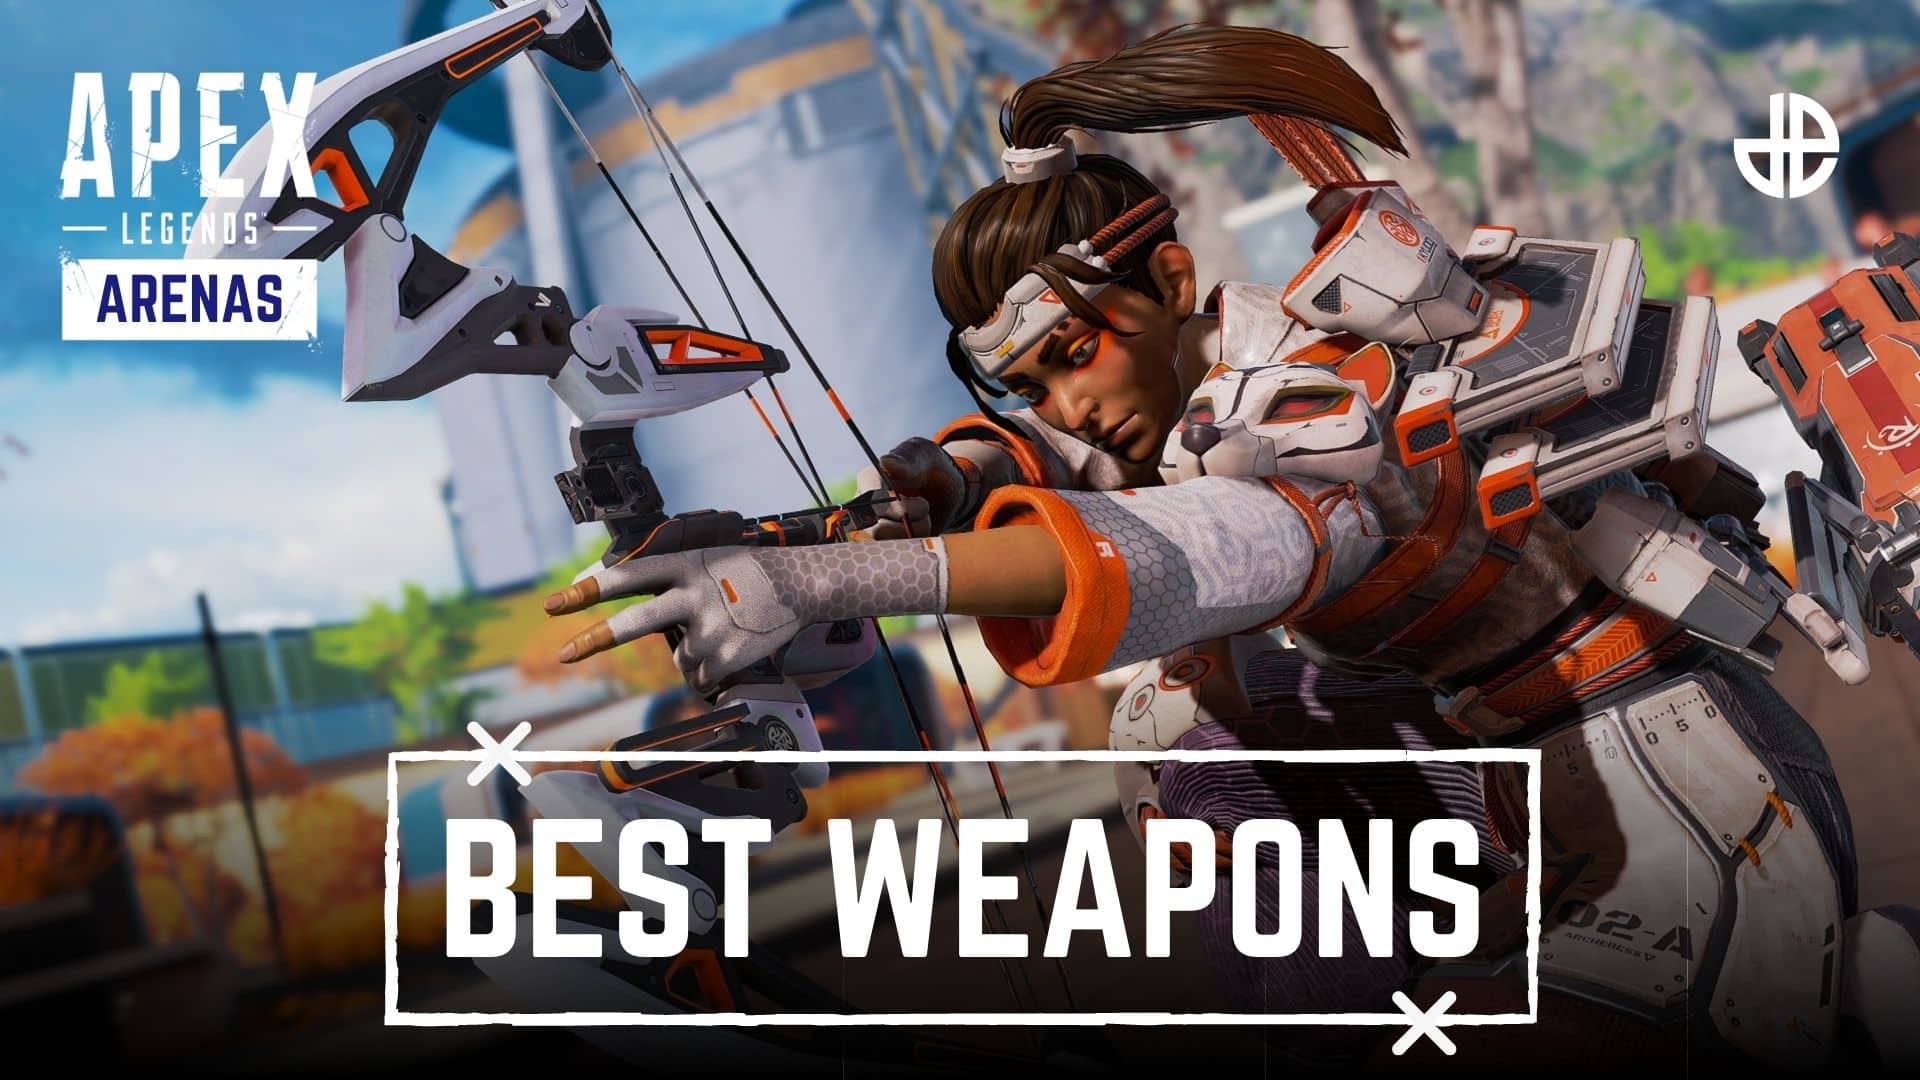 Best weapons in Apex Legends Arenas